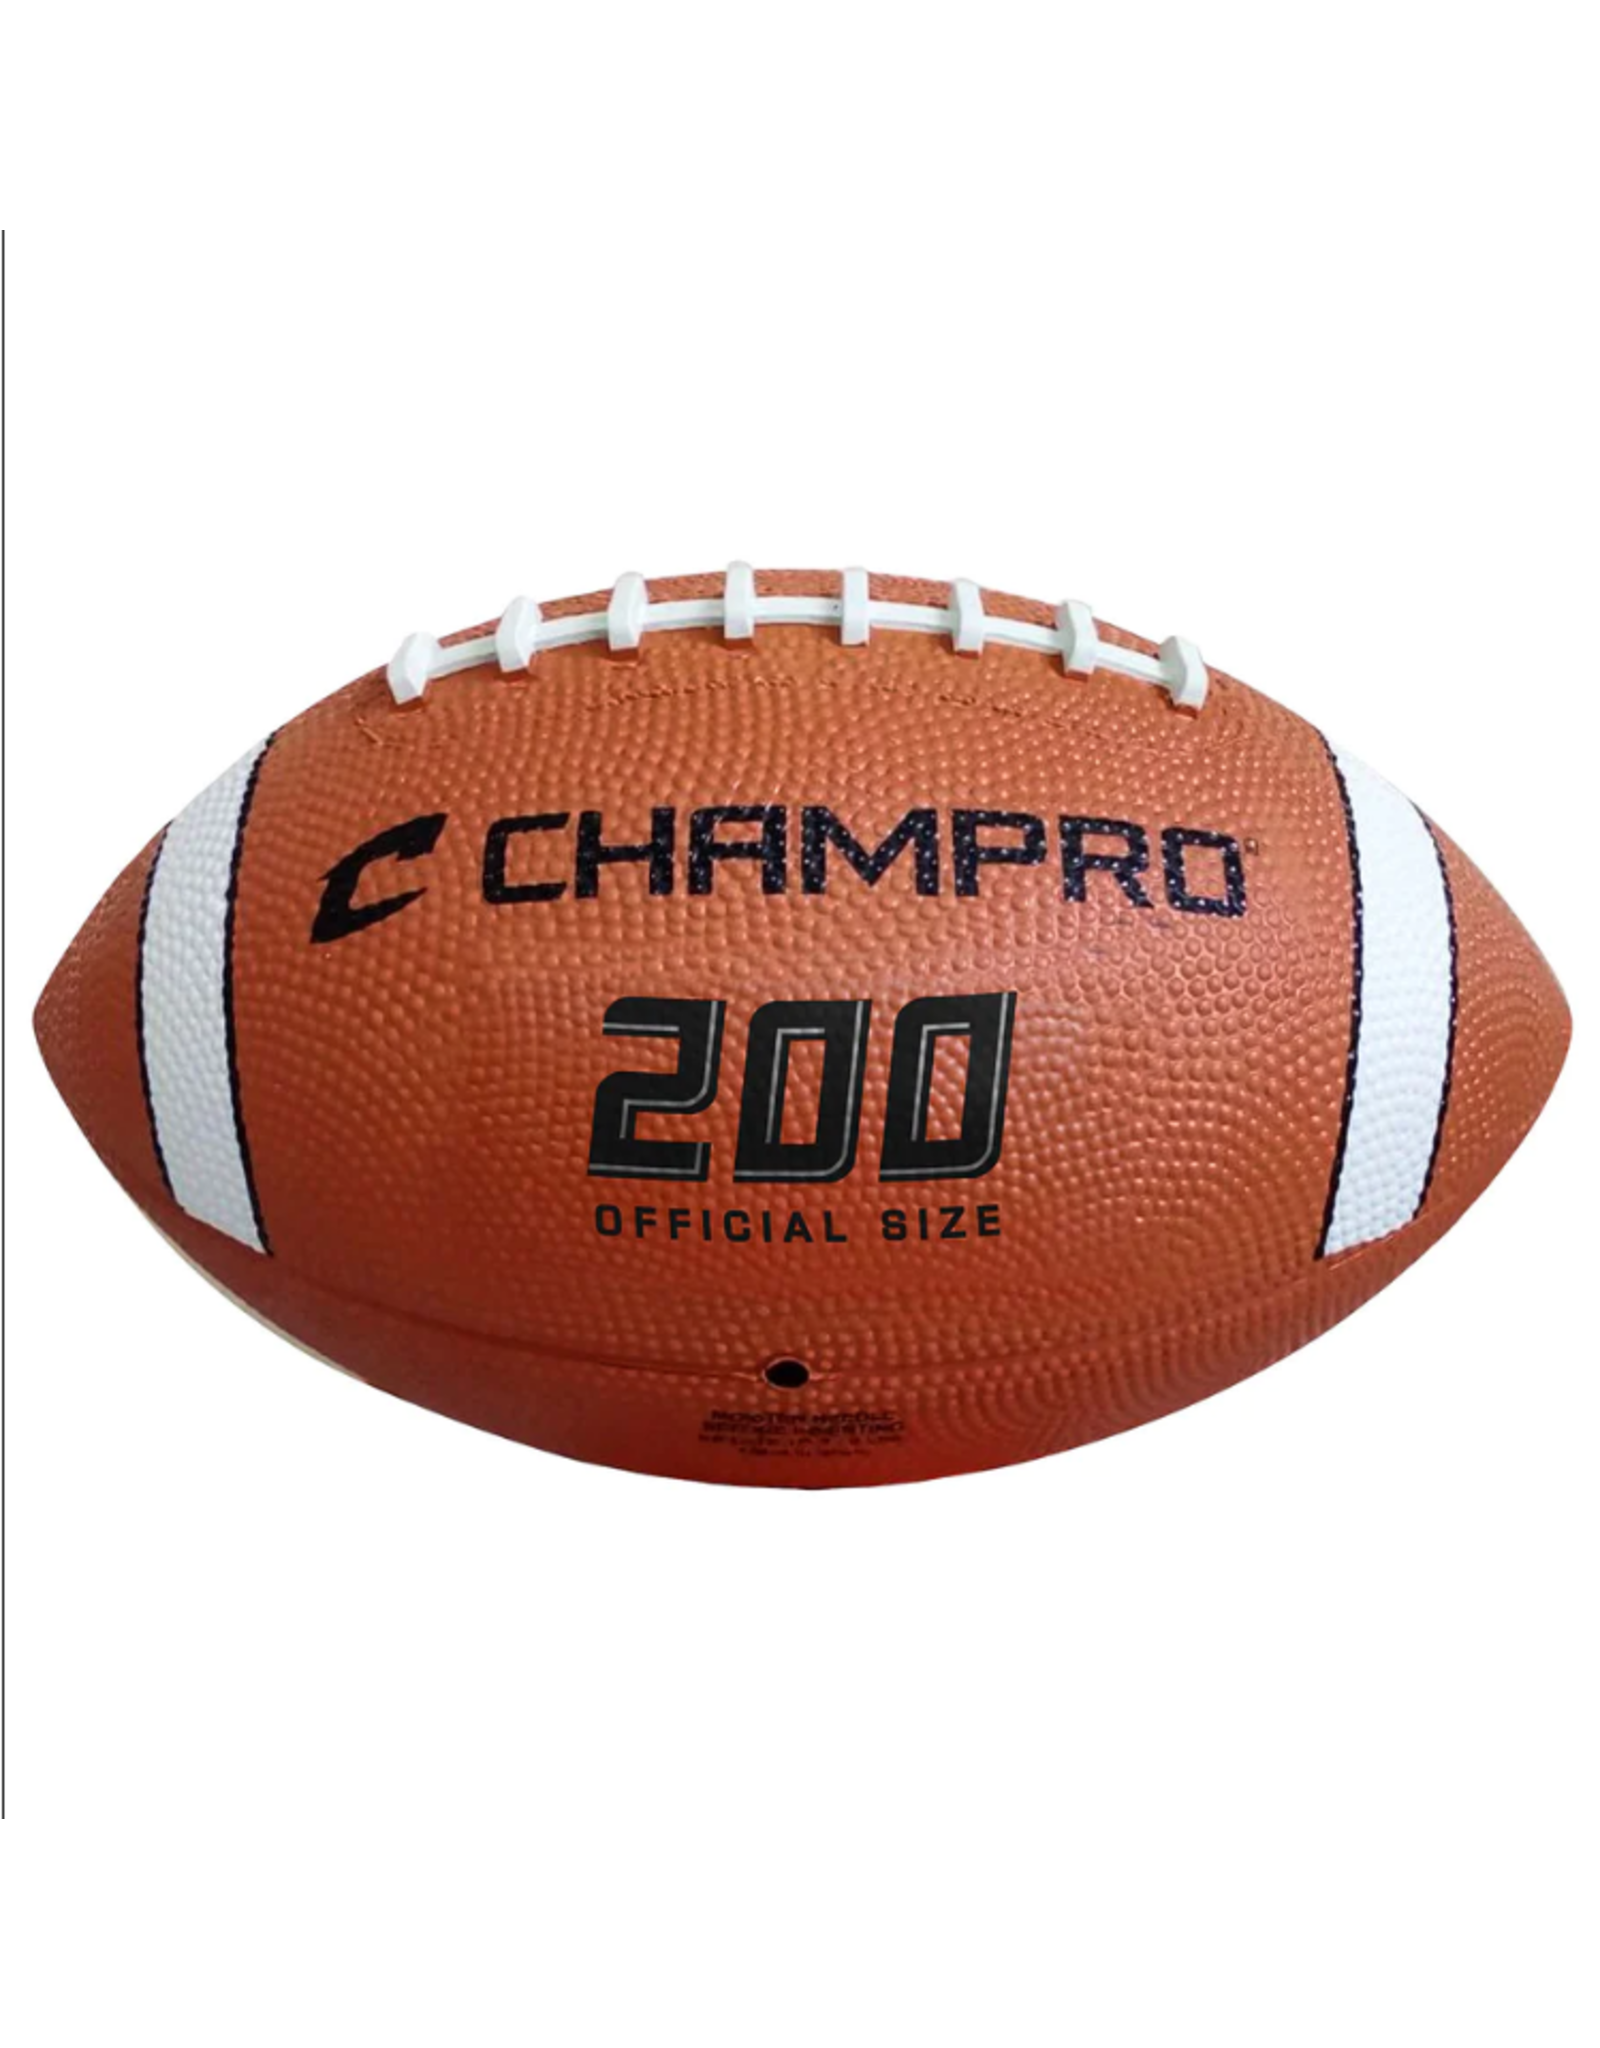 Champro Champro 200 Rubber Football